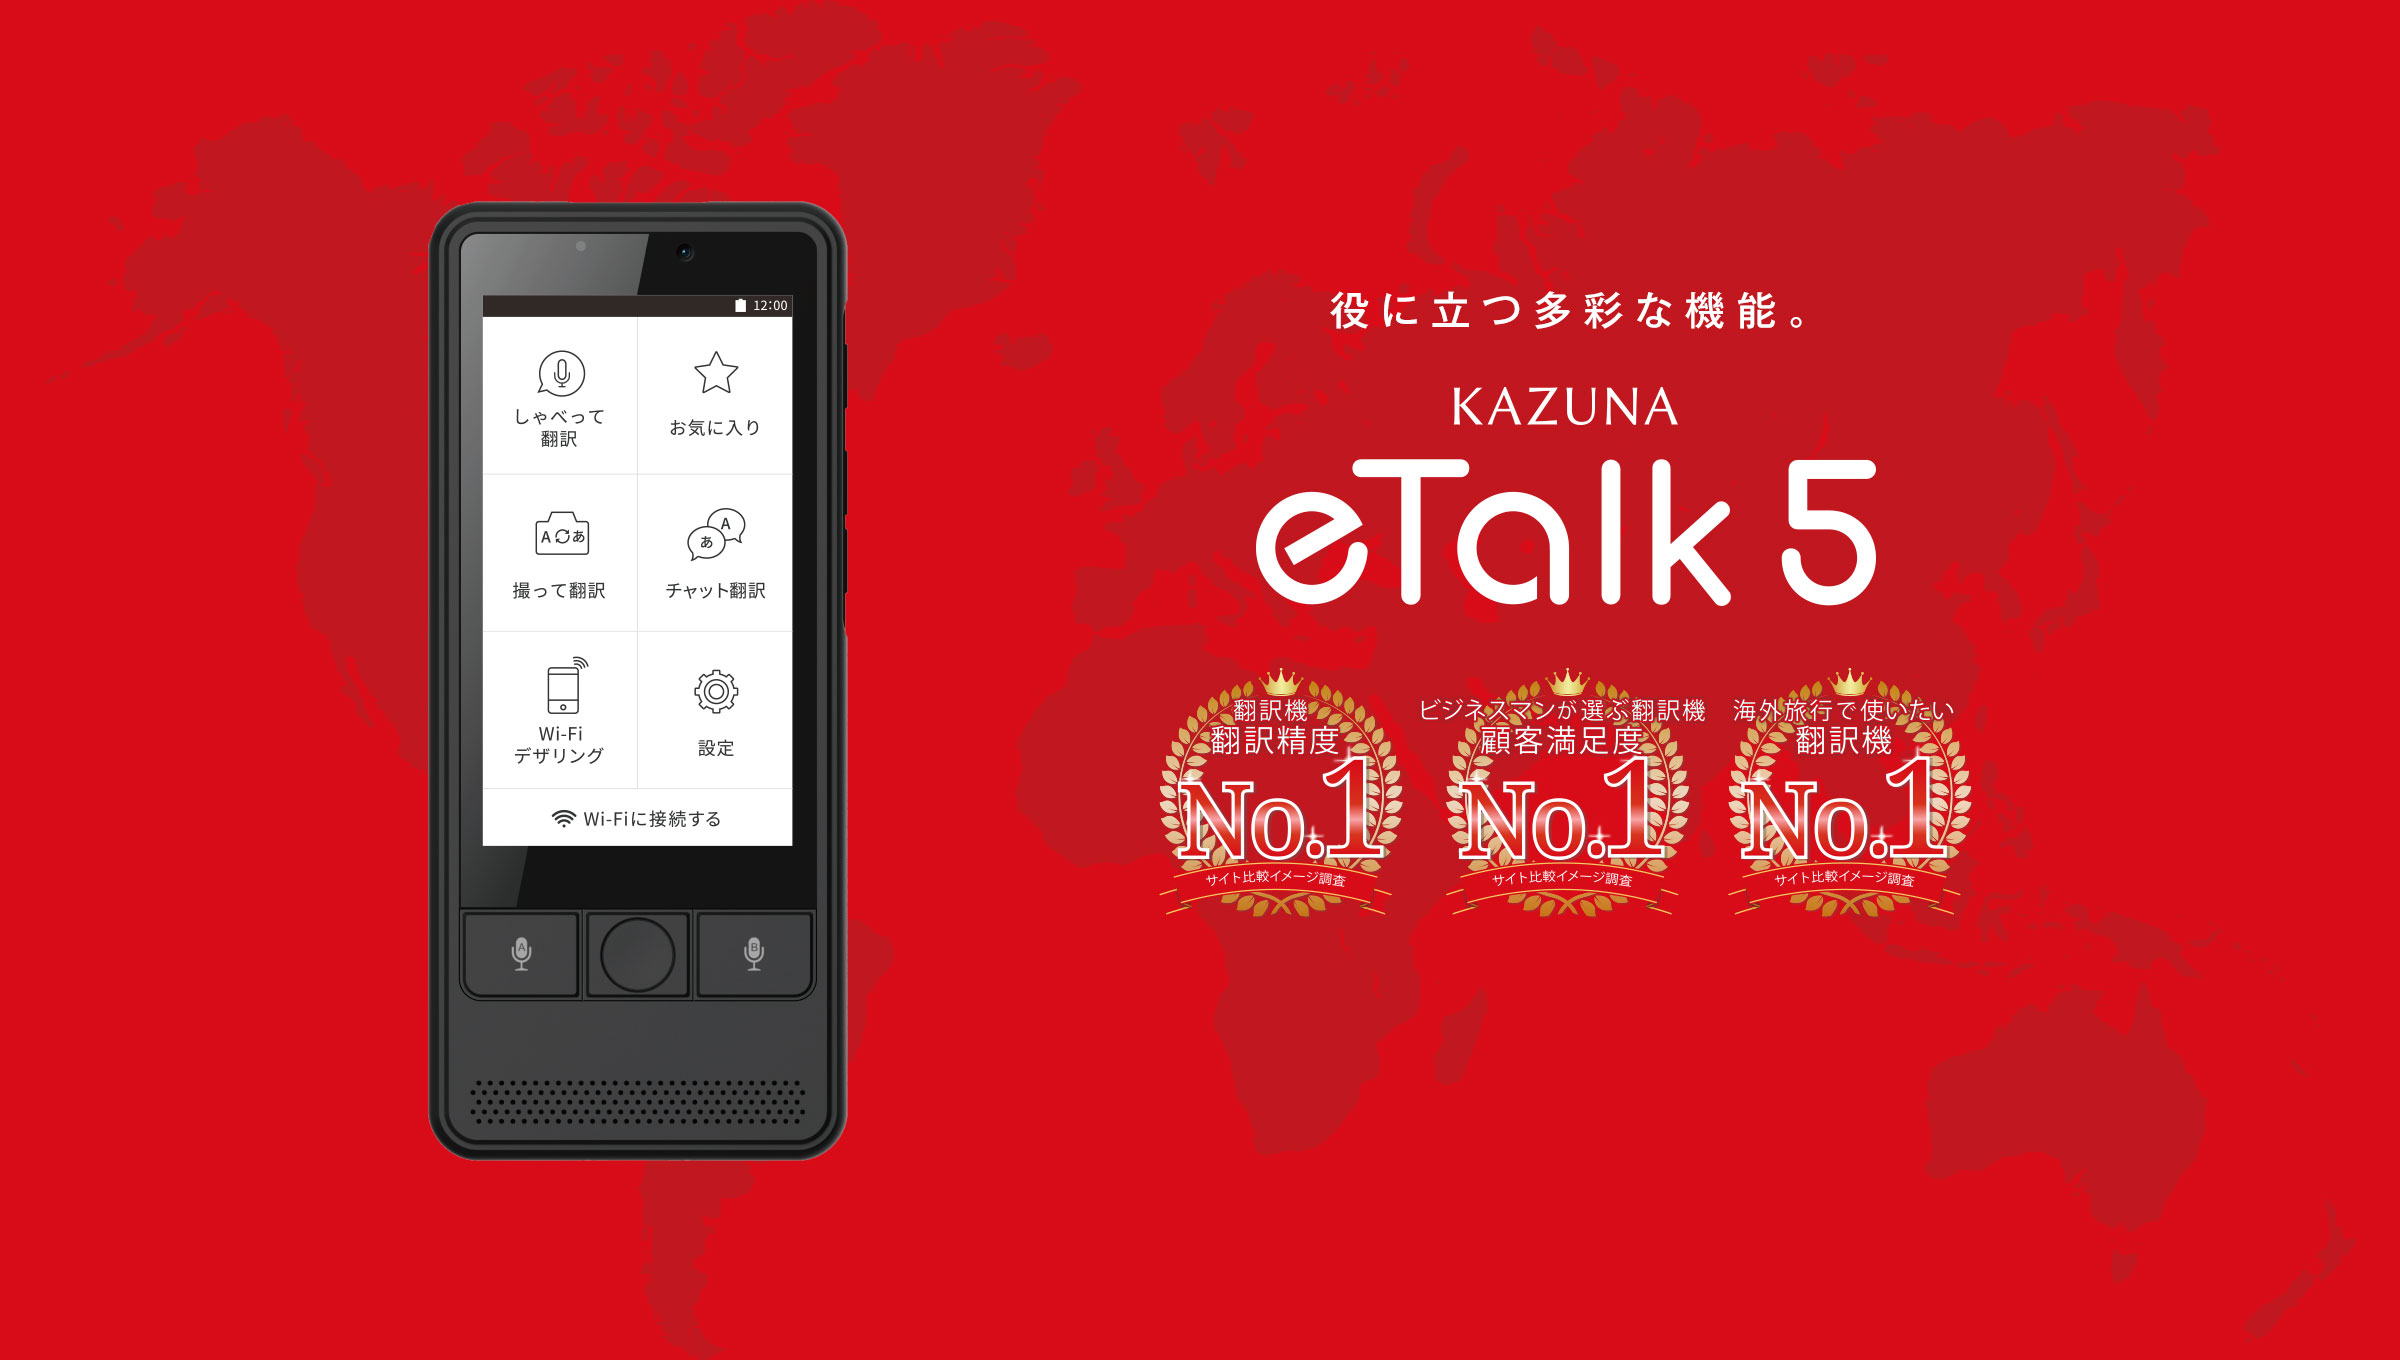 KAZUNA eTalk 5 新品未開封 翻訳機 SIMフリー SIM同梱版